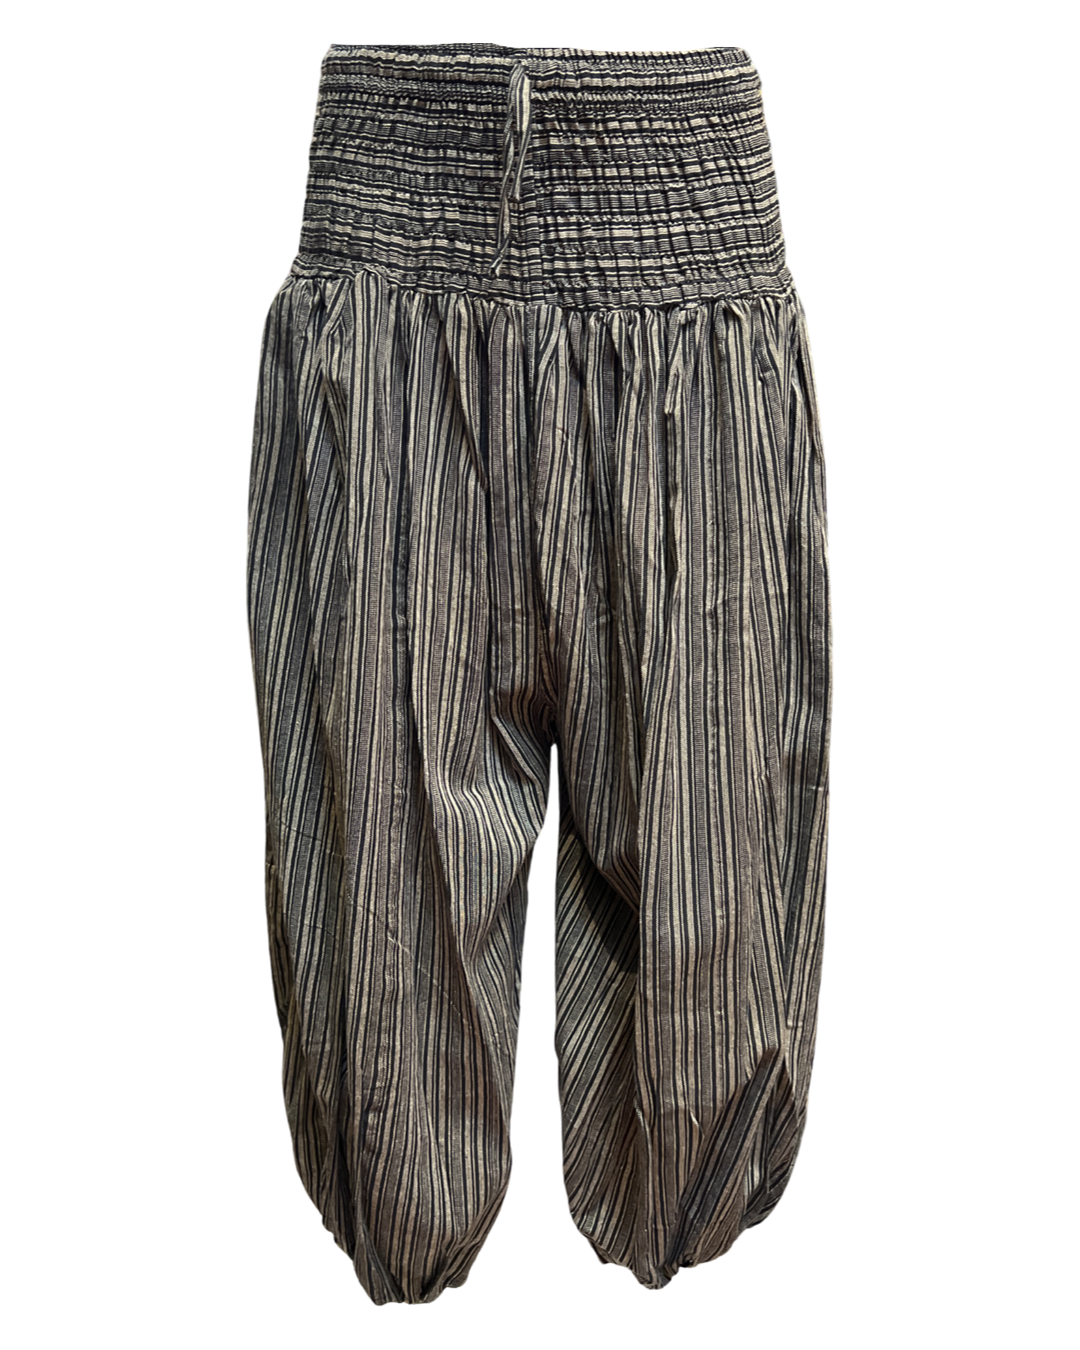 Pantalon sarouel ethnique rayé